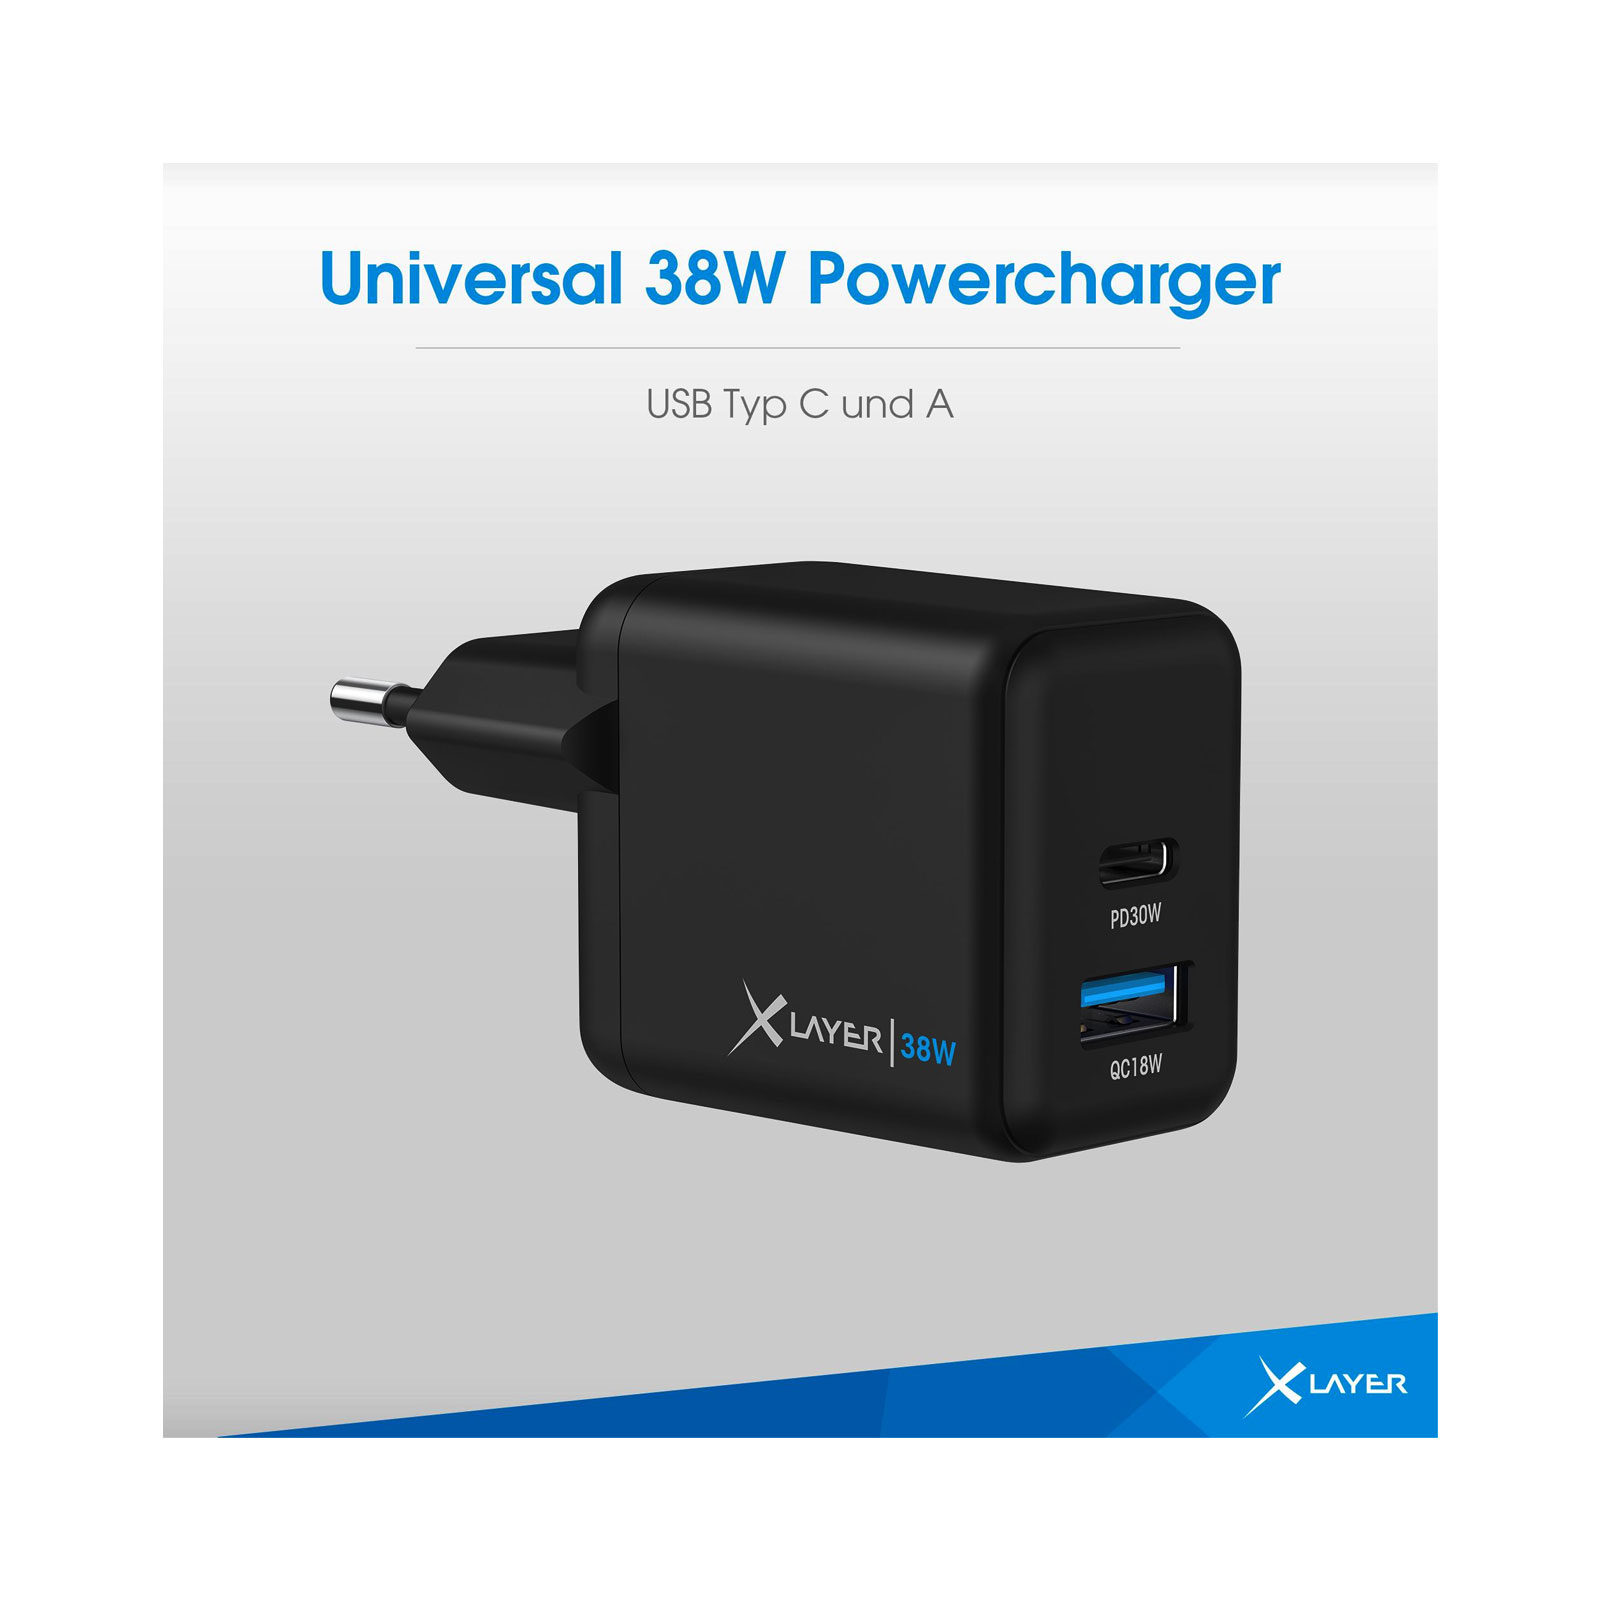 XLayer Universal 38W Powercharger USB Typ C, Black